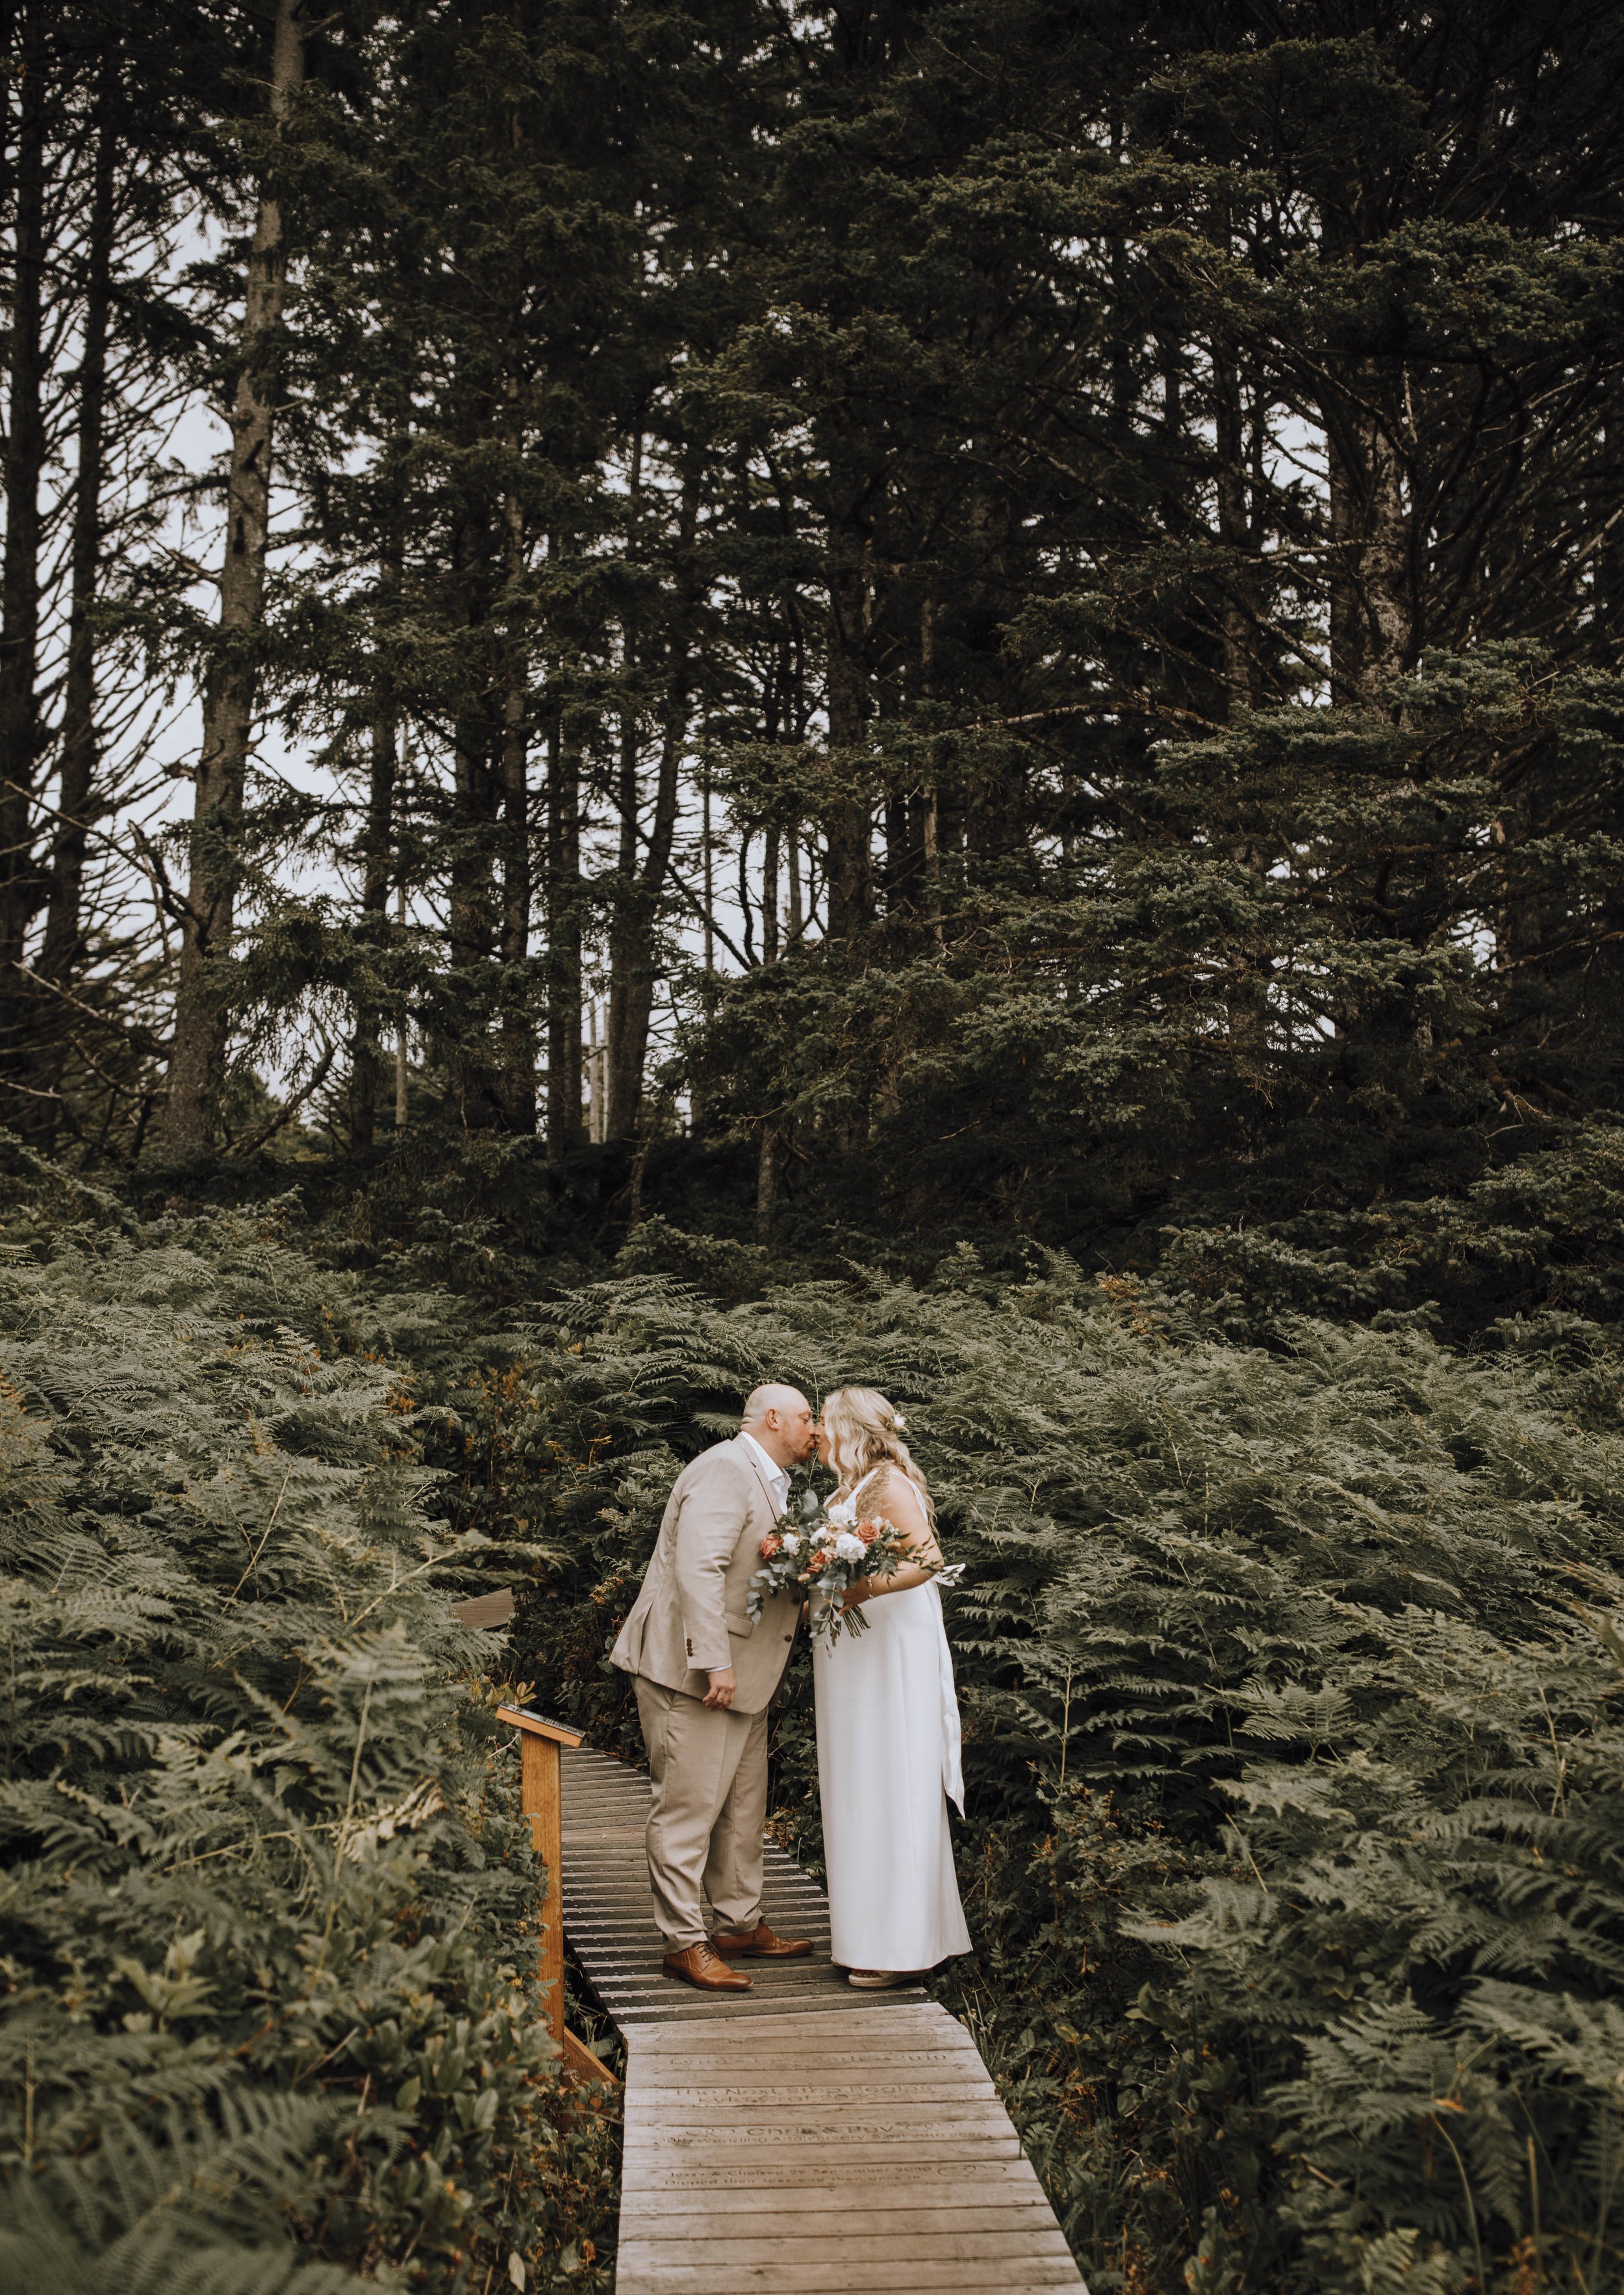 Jamie and Brad wedding - Tofino Vancouver Island British Columbia - Elyse Anna Photography-3260.jpg